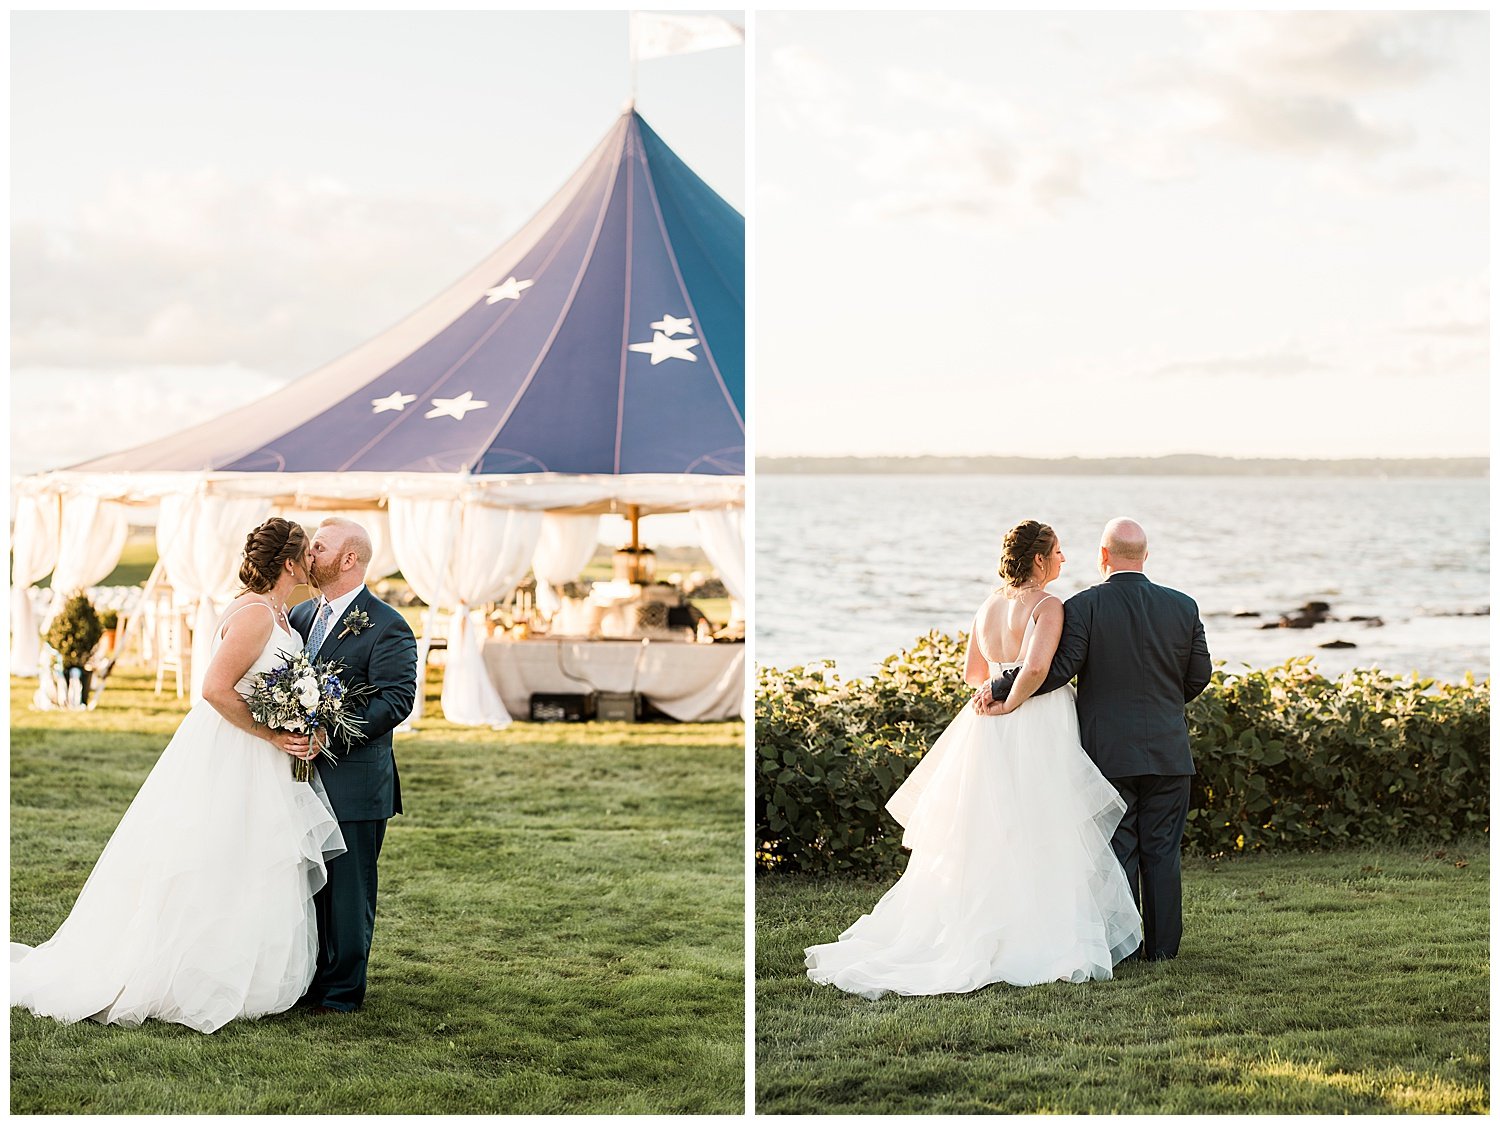 Little-Compton-RI-Wedding-Photographer-Summer-Weddings-Rhode-Island-Photography-Apollo-Fields-094.jpg